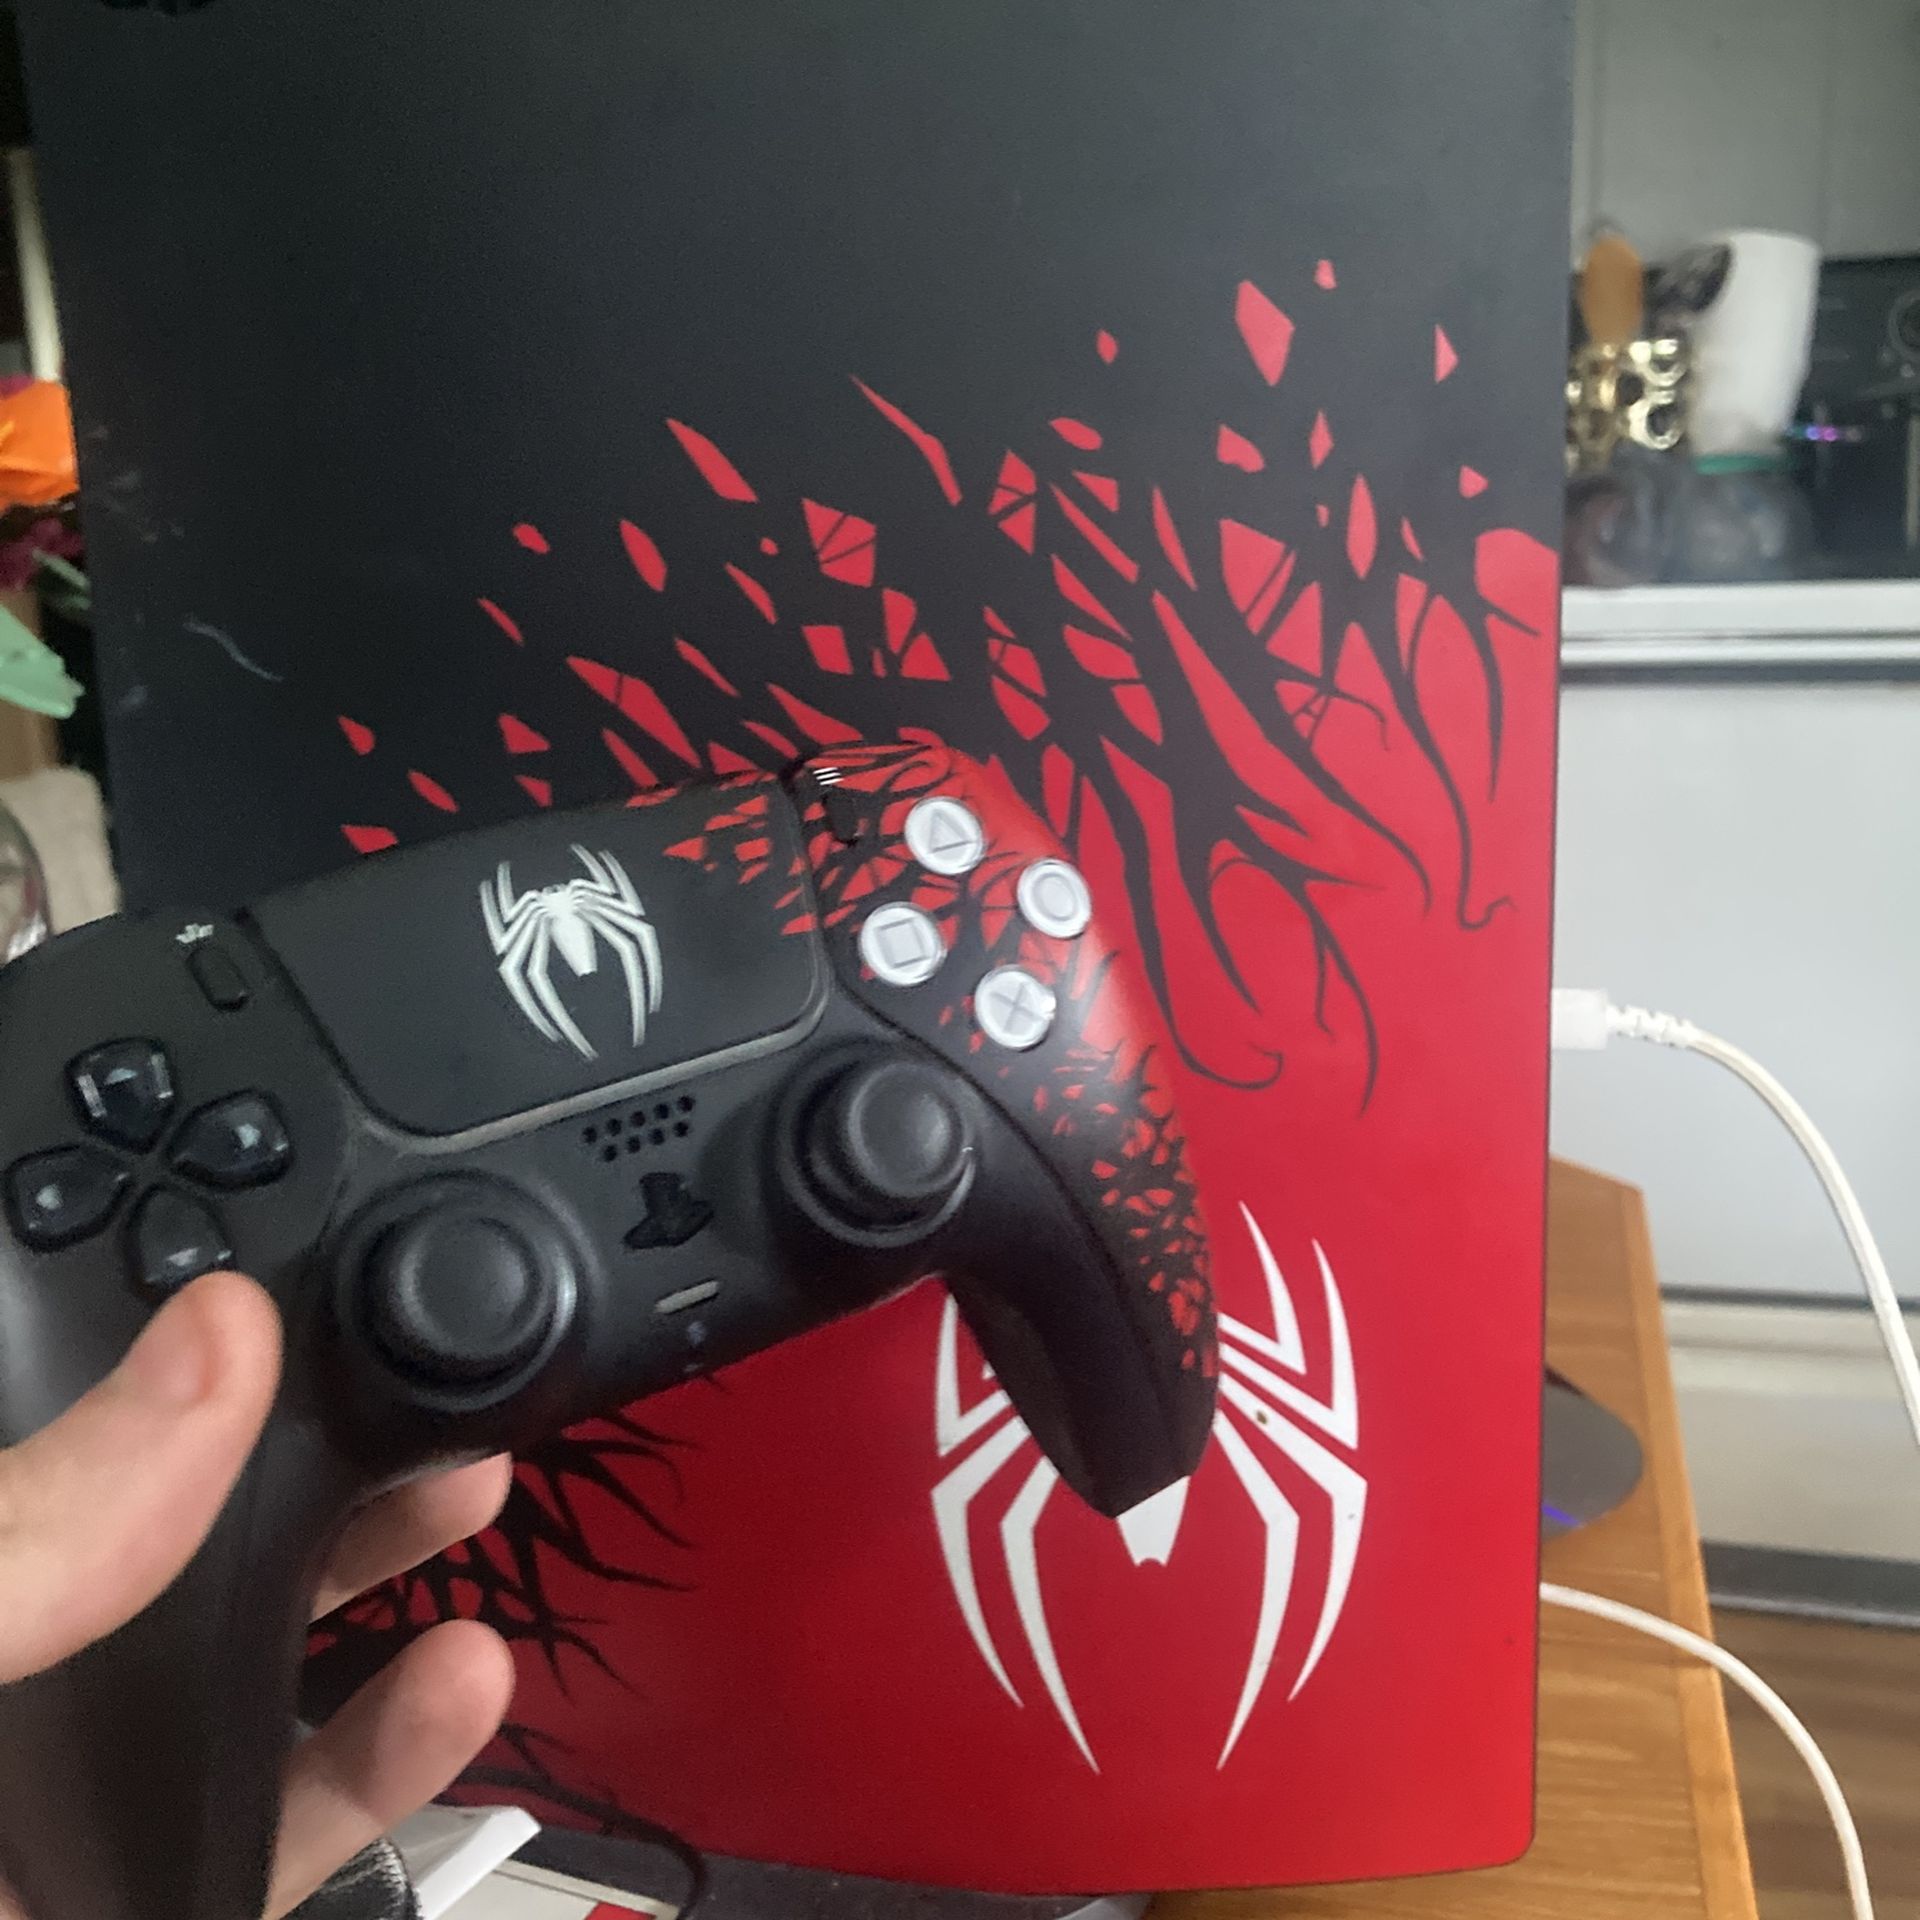 ps5 (spider-man edition)